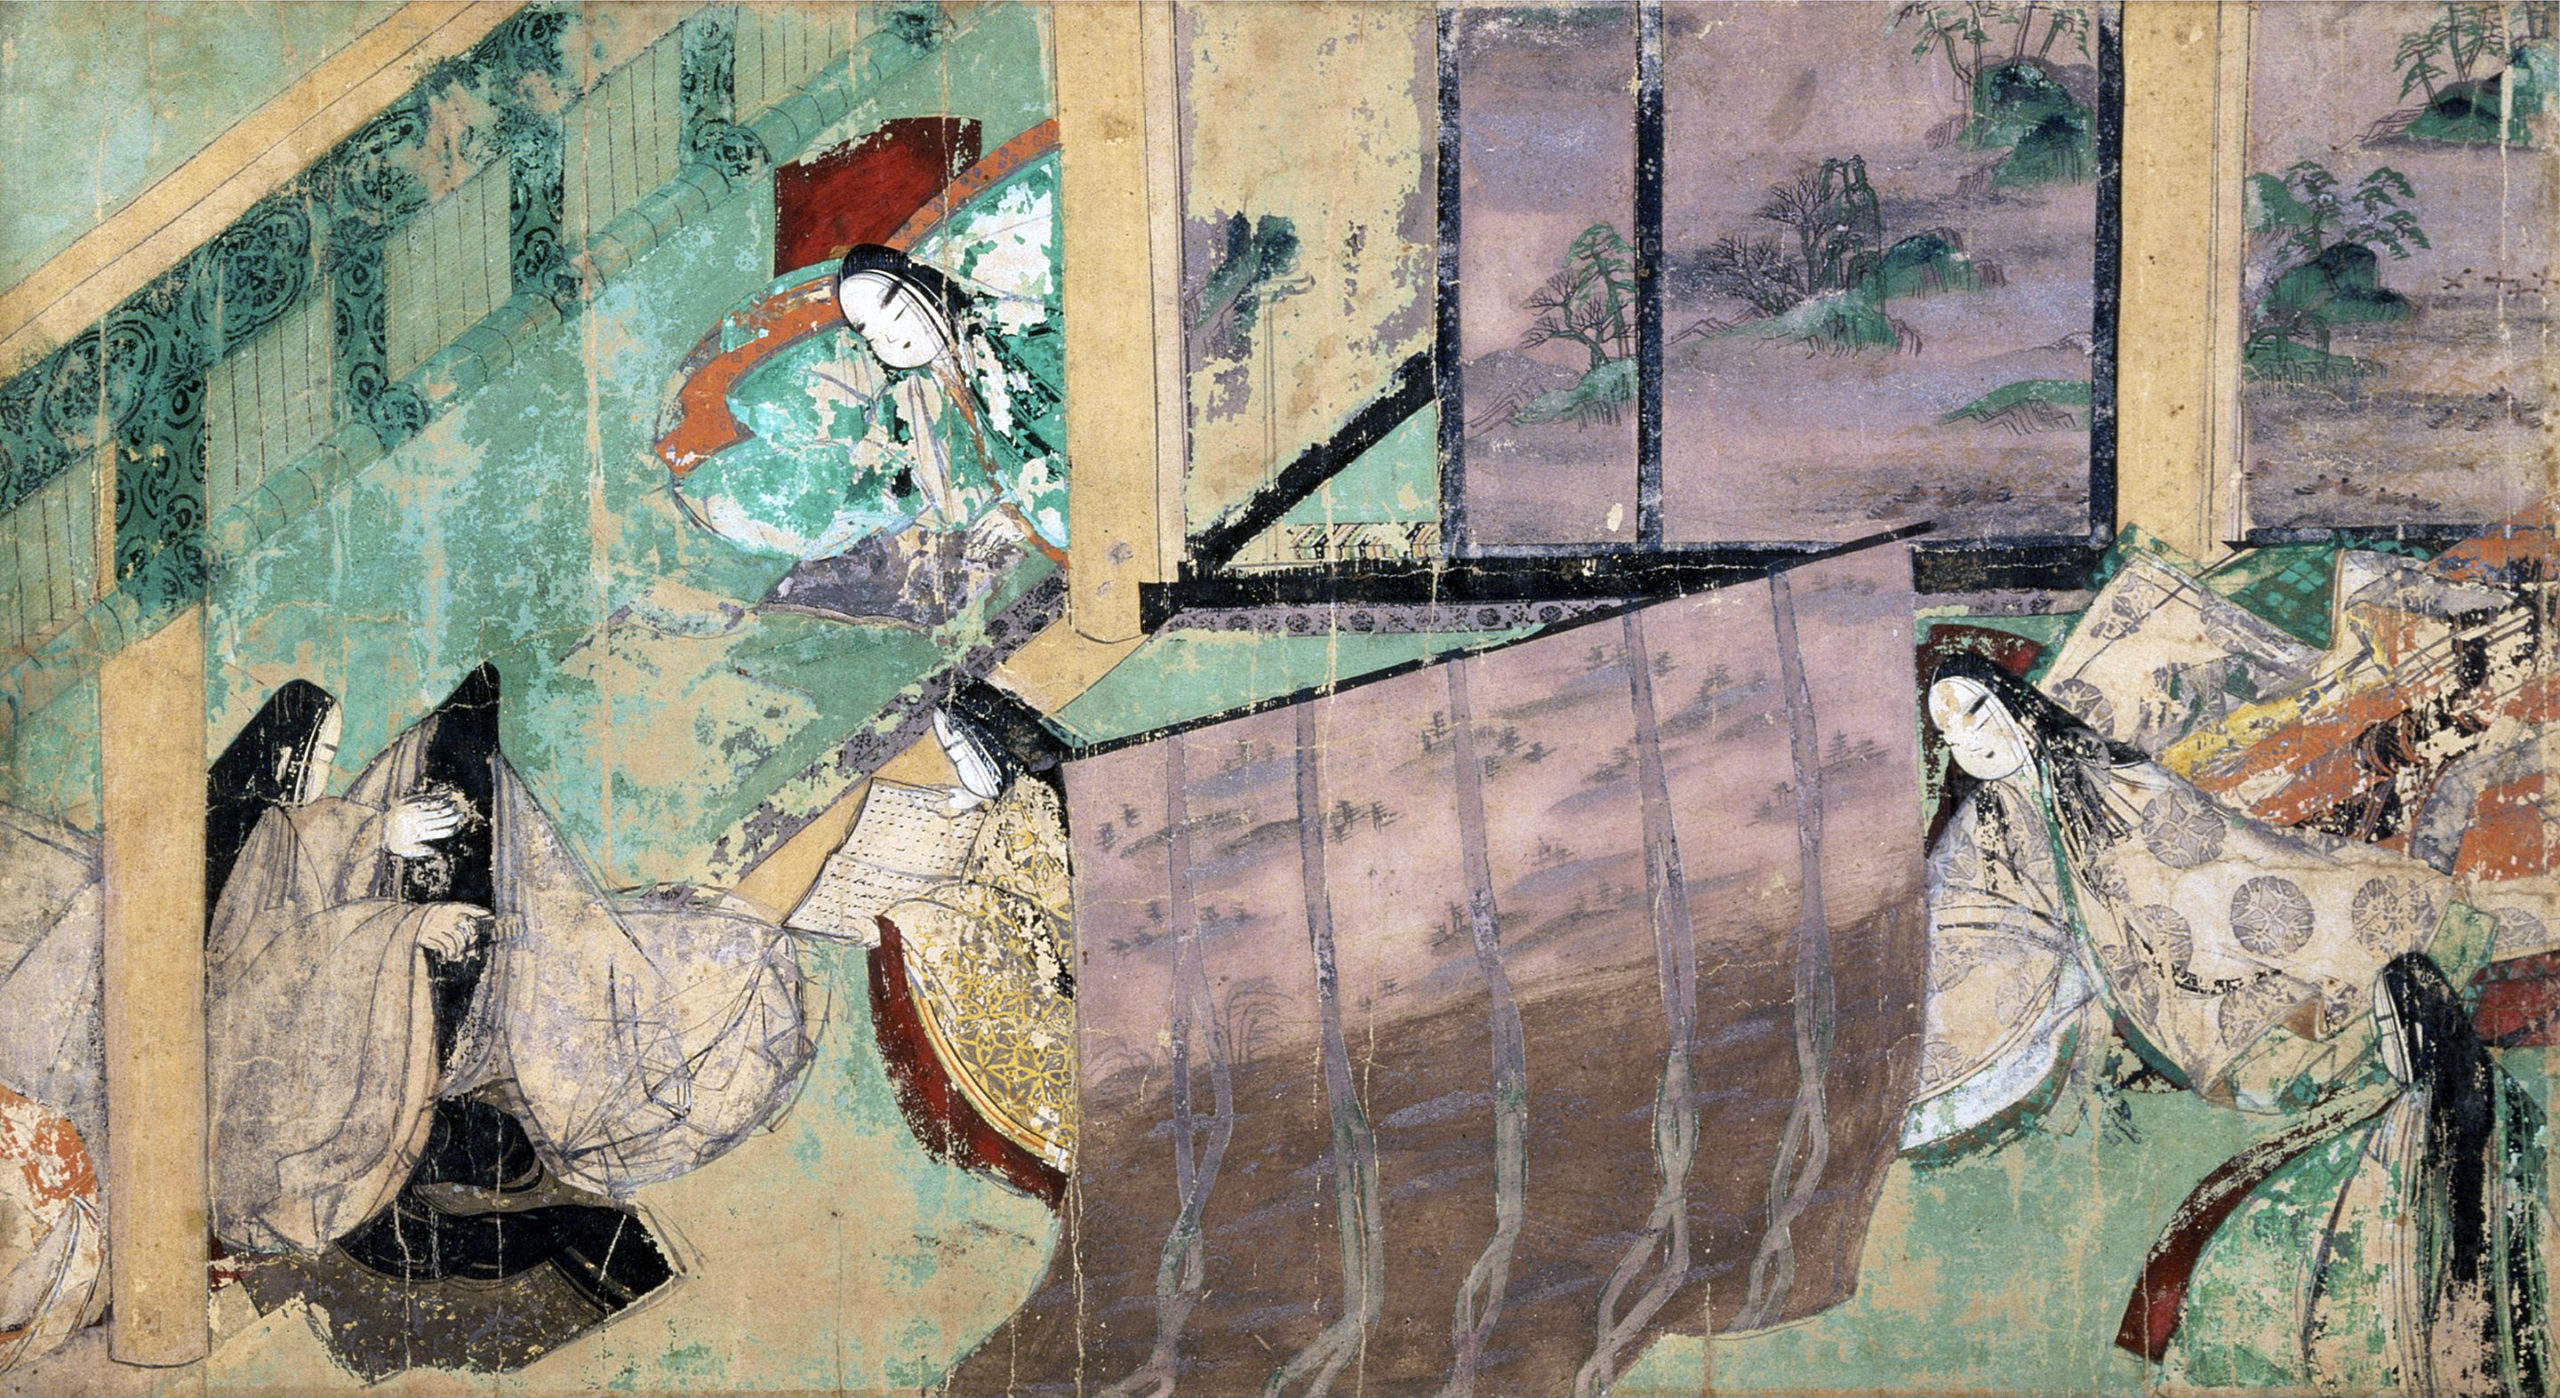 A scene from Azumaya, The Tale of Genji, c. 1130 century, handscroll fragment (Tokugawa Museum, Nagoya, Japan)